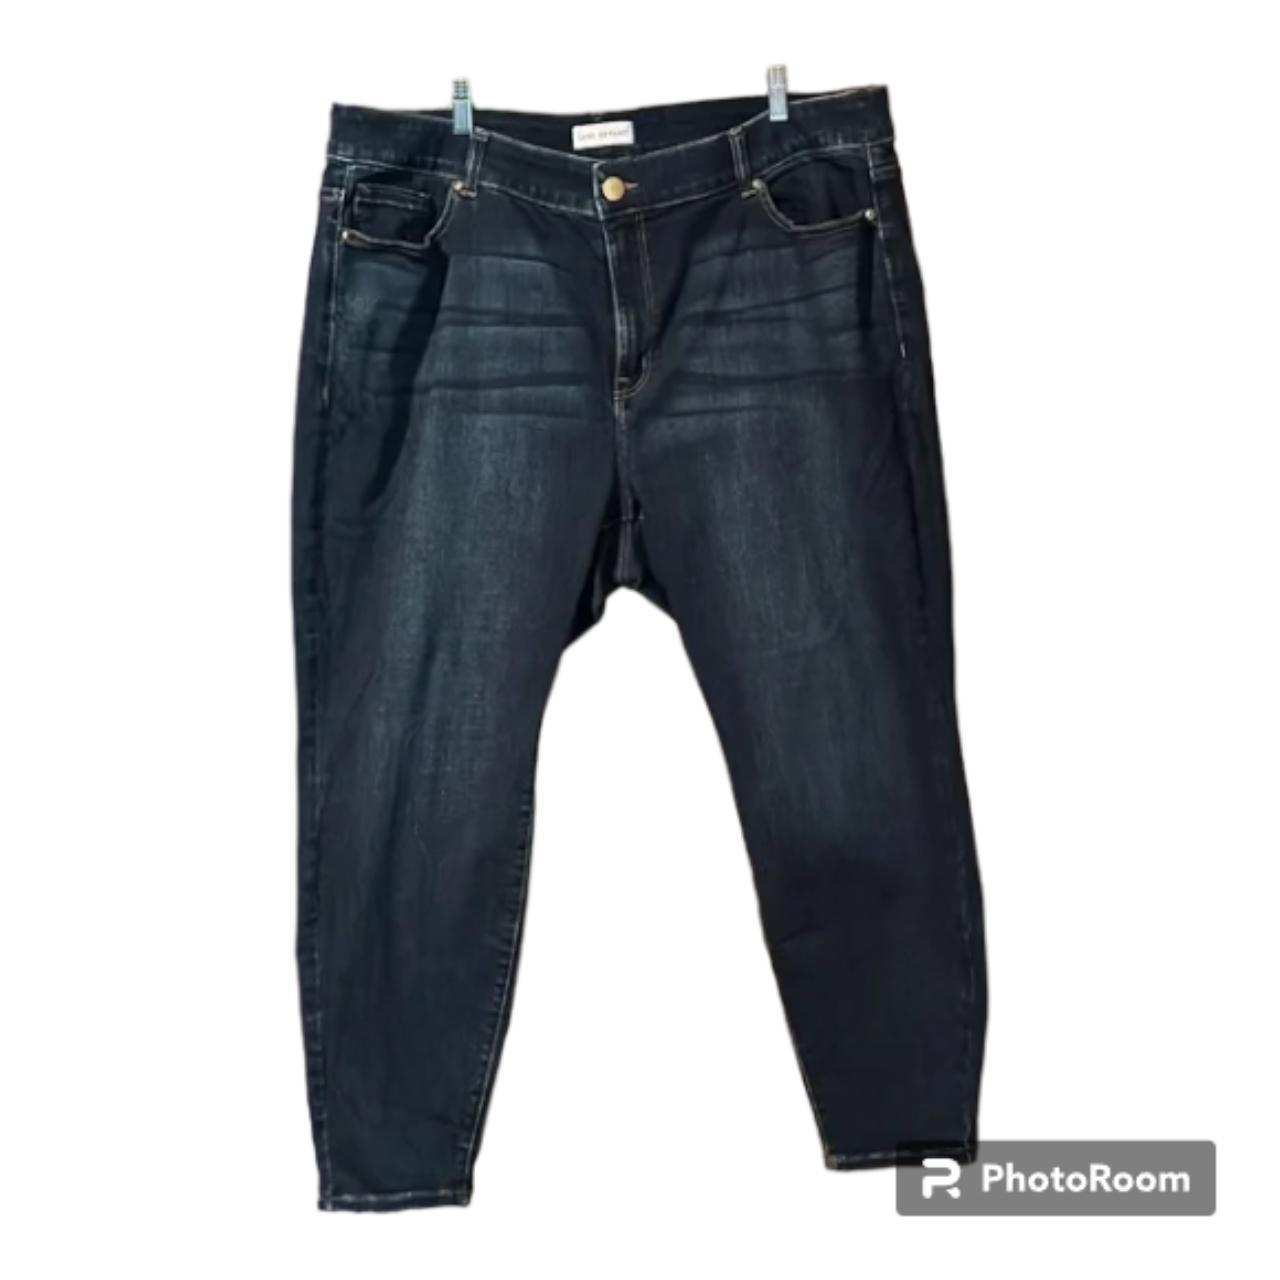 Flex magic waistband, high-rise skinny jeans by Lane - Depop